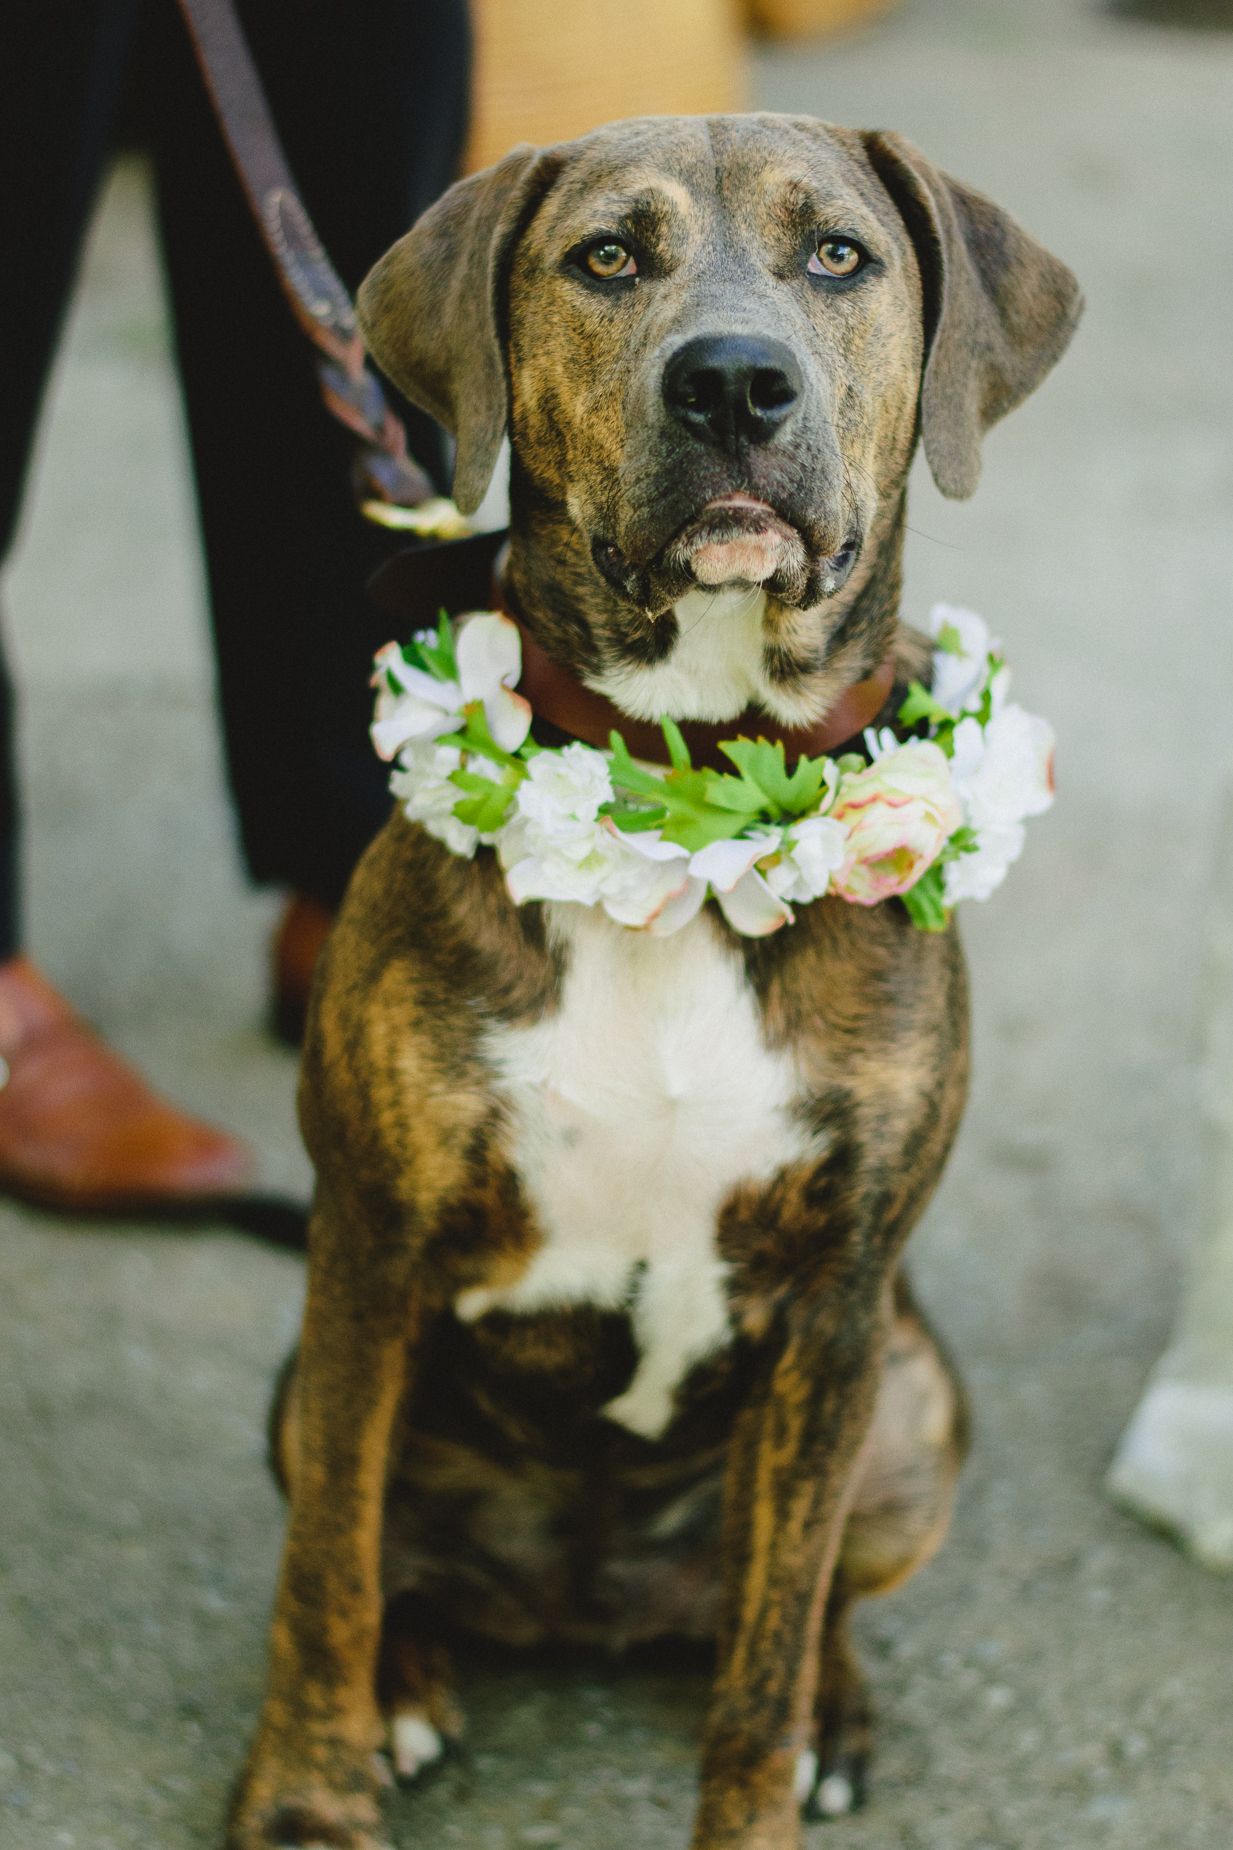 Dog ring bearer at a wedding.